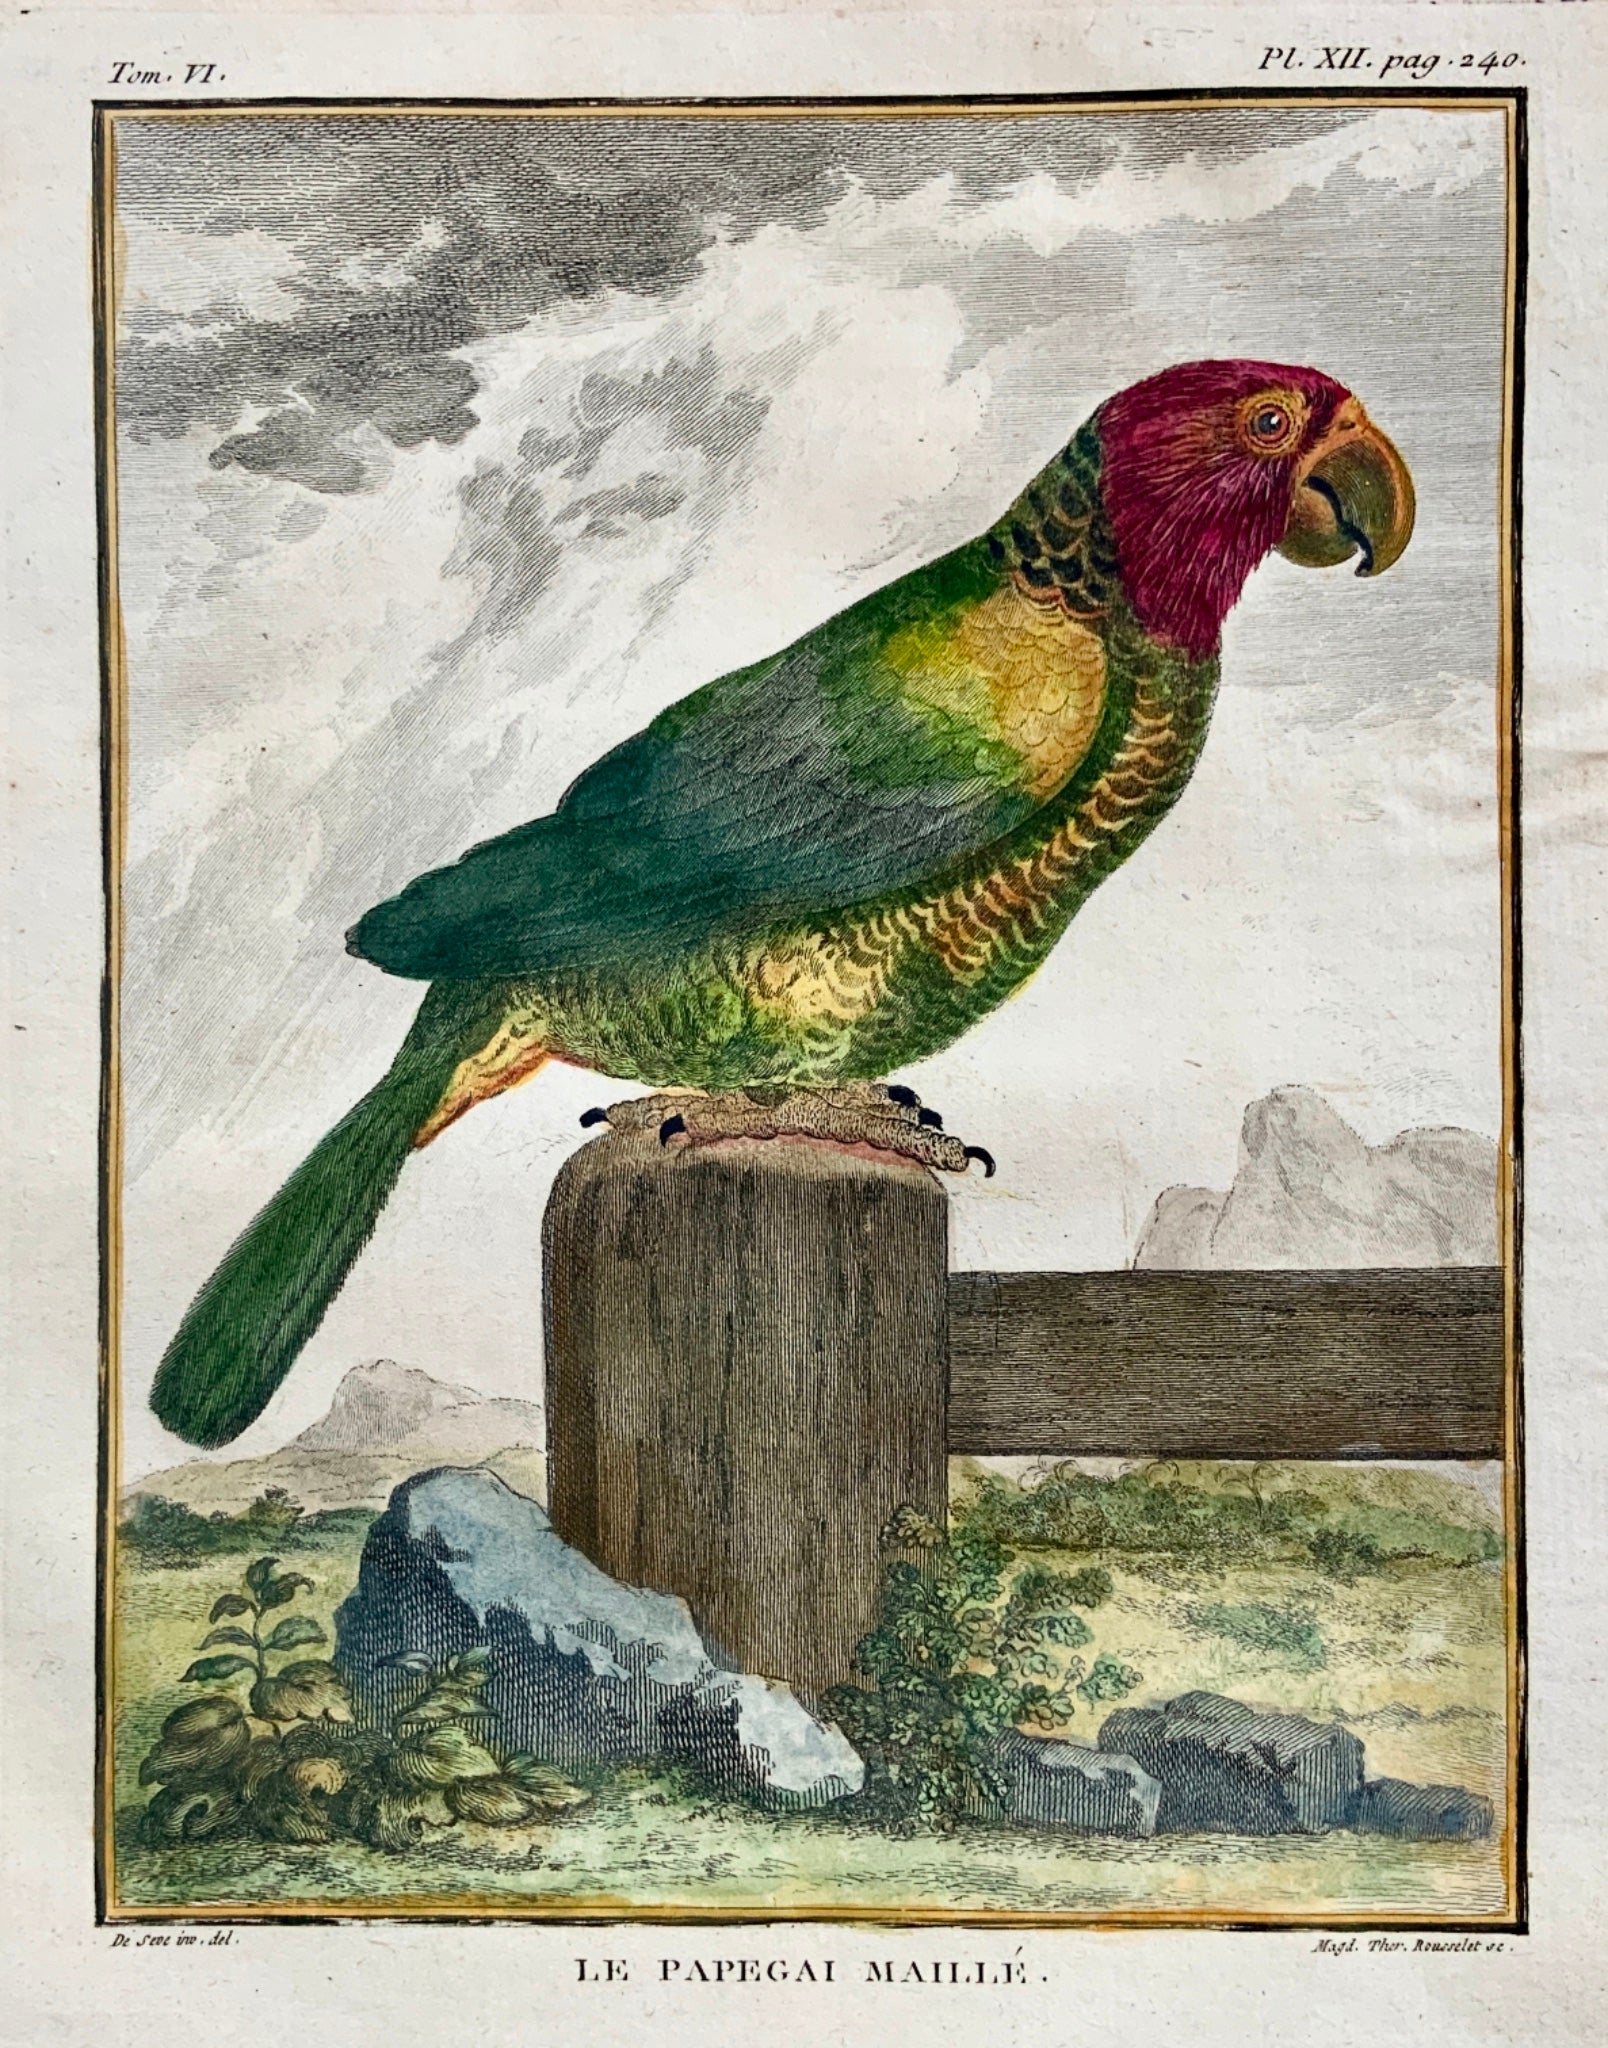 1779 Rousselet after Jacques de Seve Red-fan PARROT Ornithology - 4to engraving